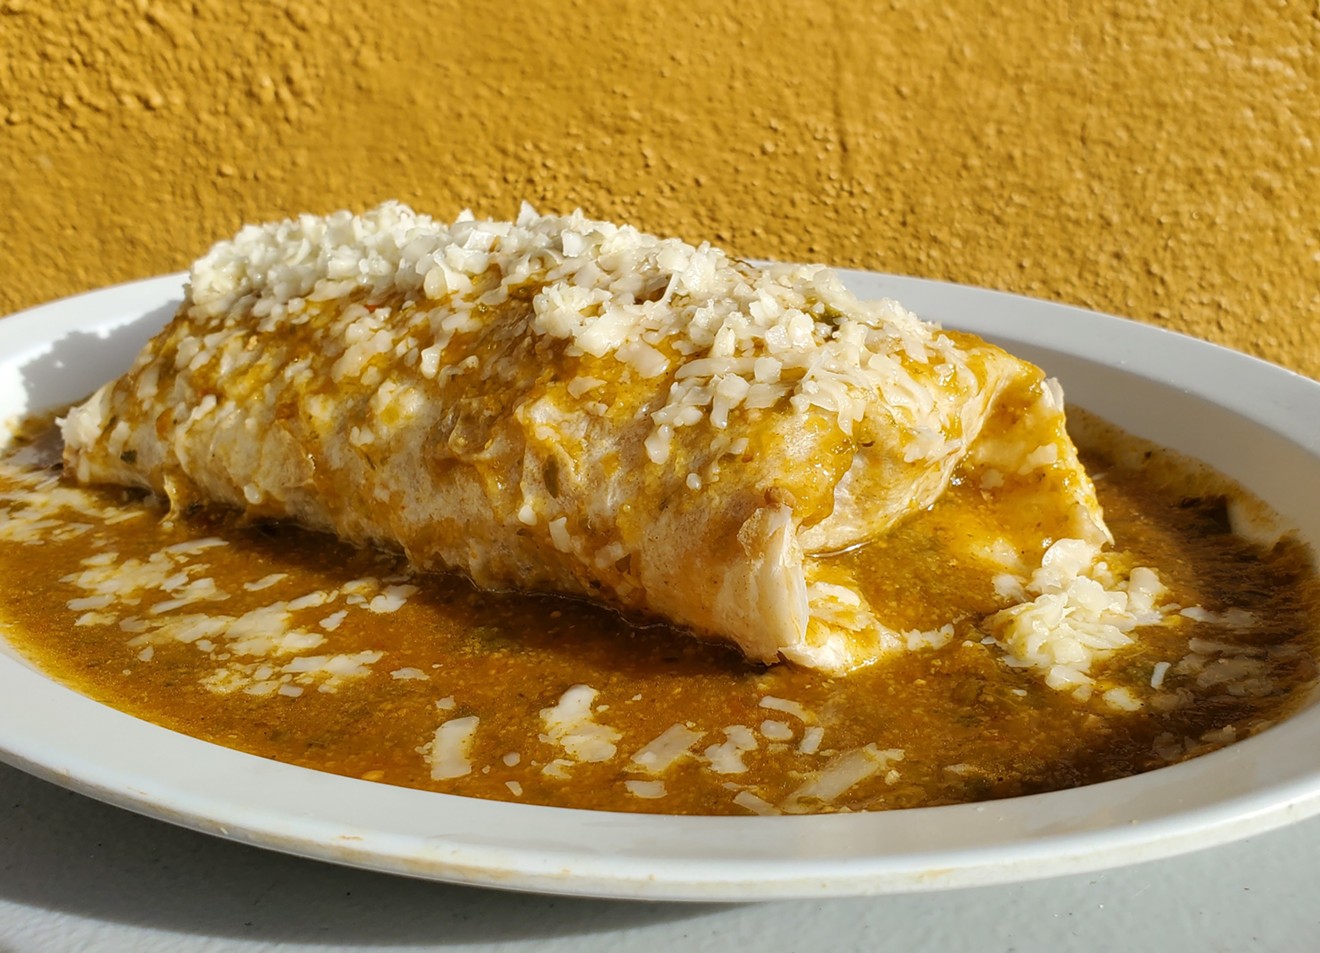 Smothered burritos at El Taco de Mexico are a Denver must.